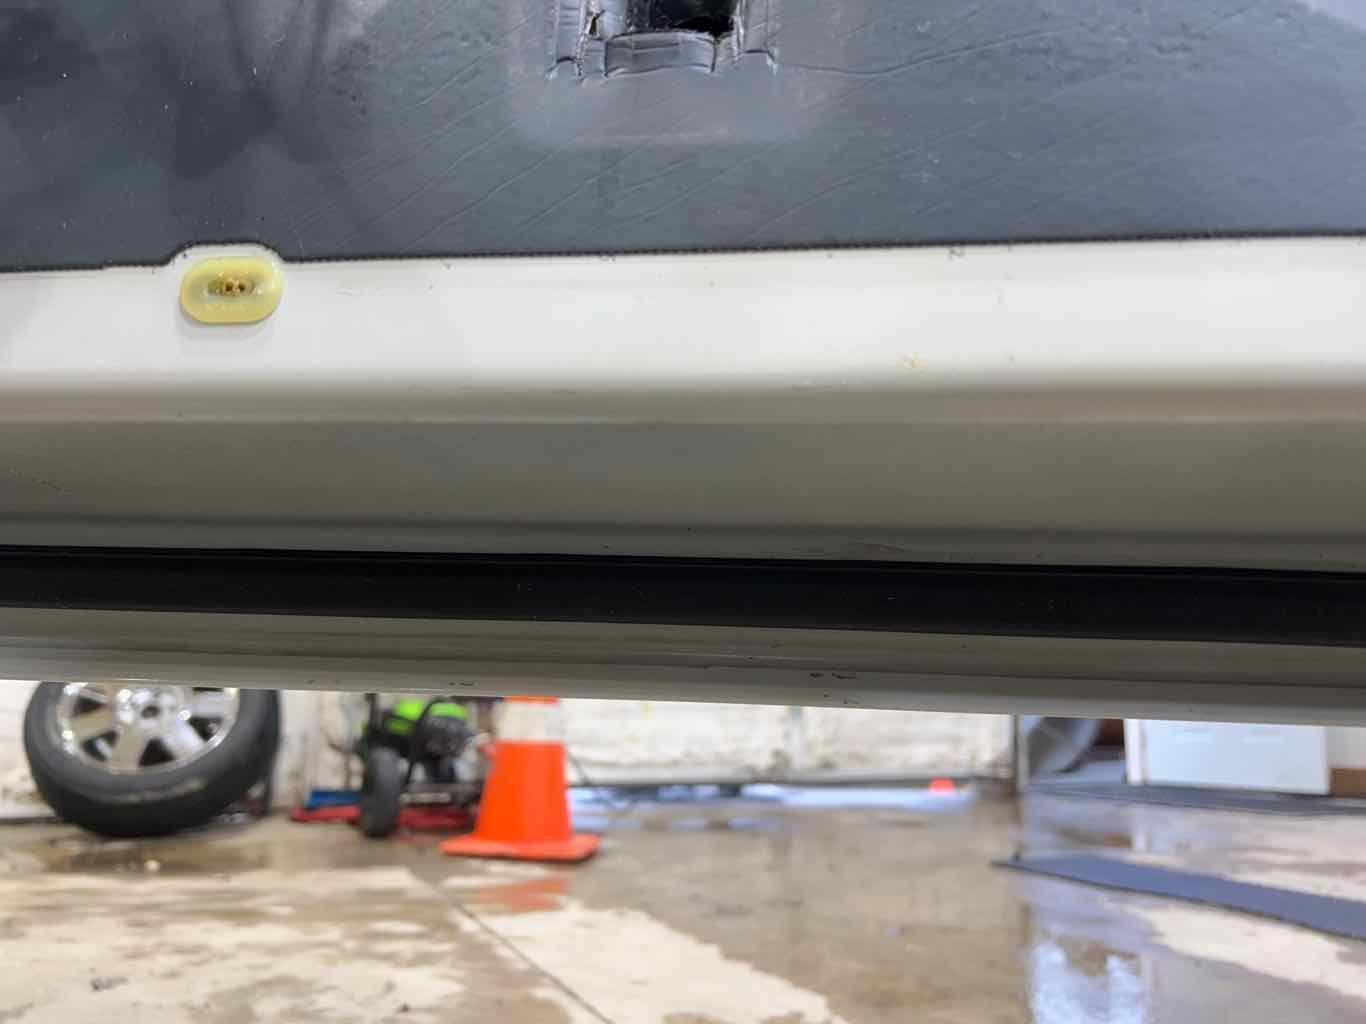 02-05 Ford Thunderbird Passenger Right RH Door With Glass (Ceramic White W5)